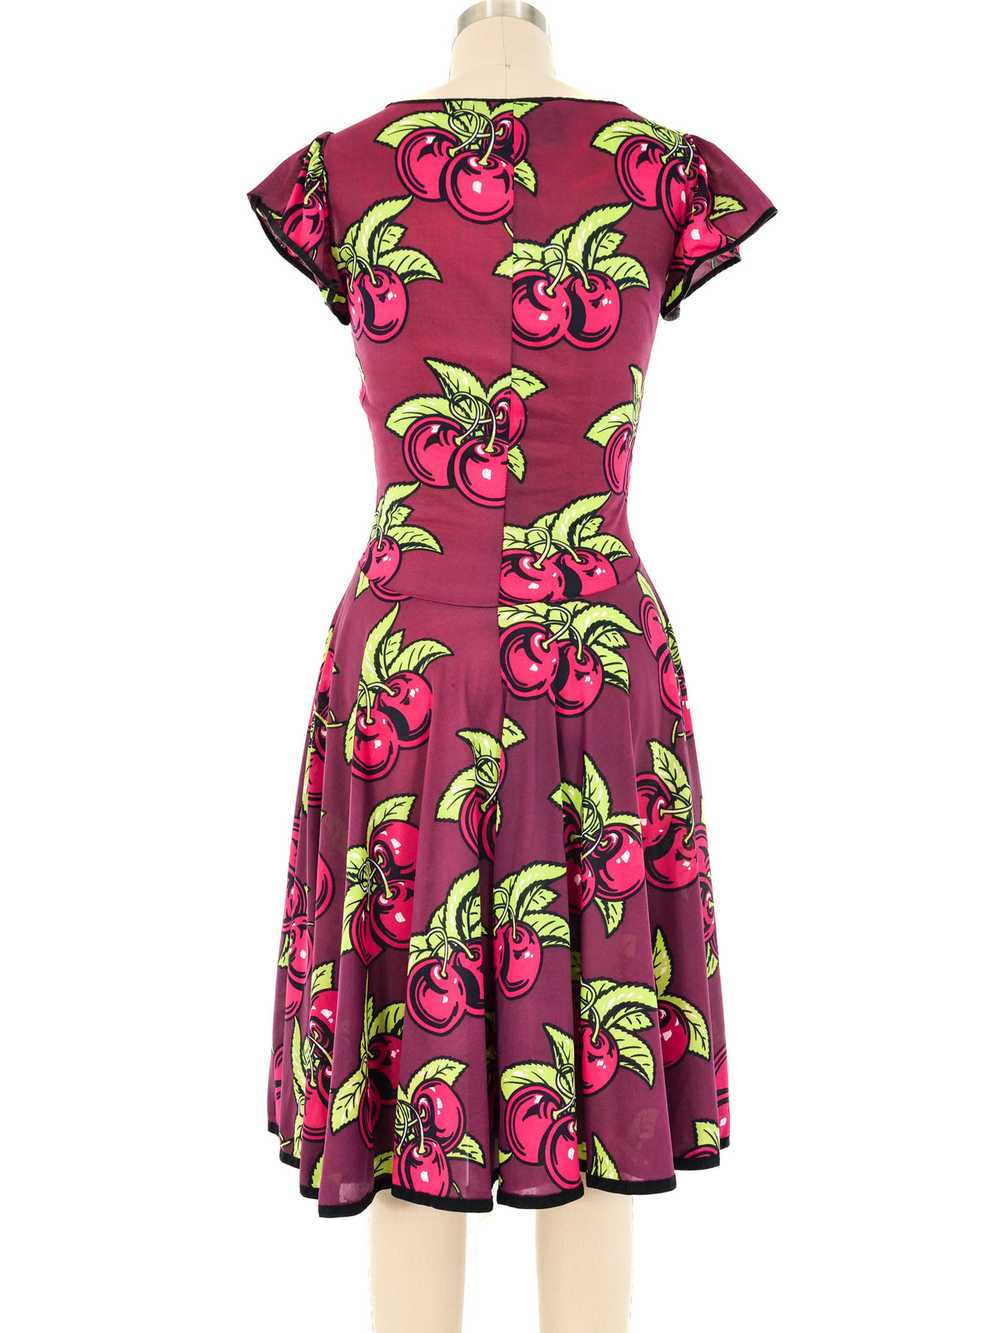 Betsey Johnson Alley Cat Cherry Print Dress - image 4